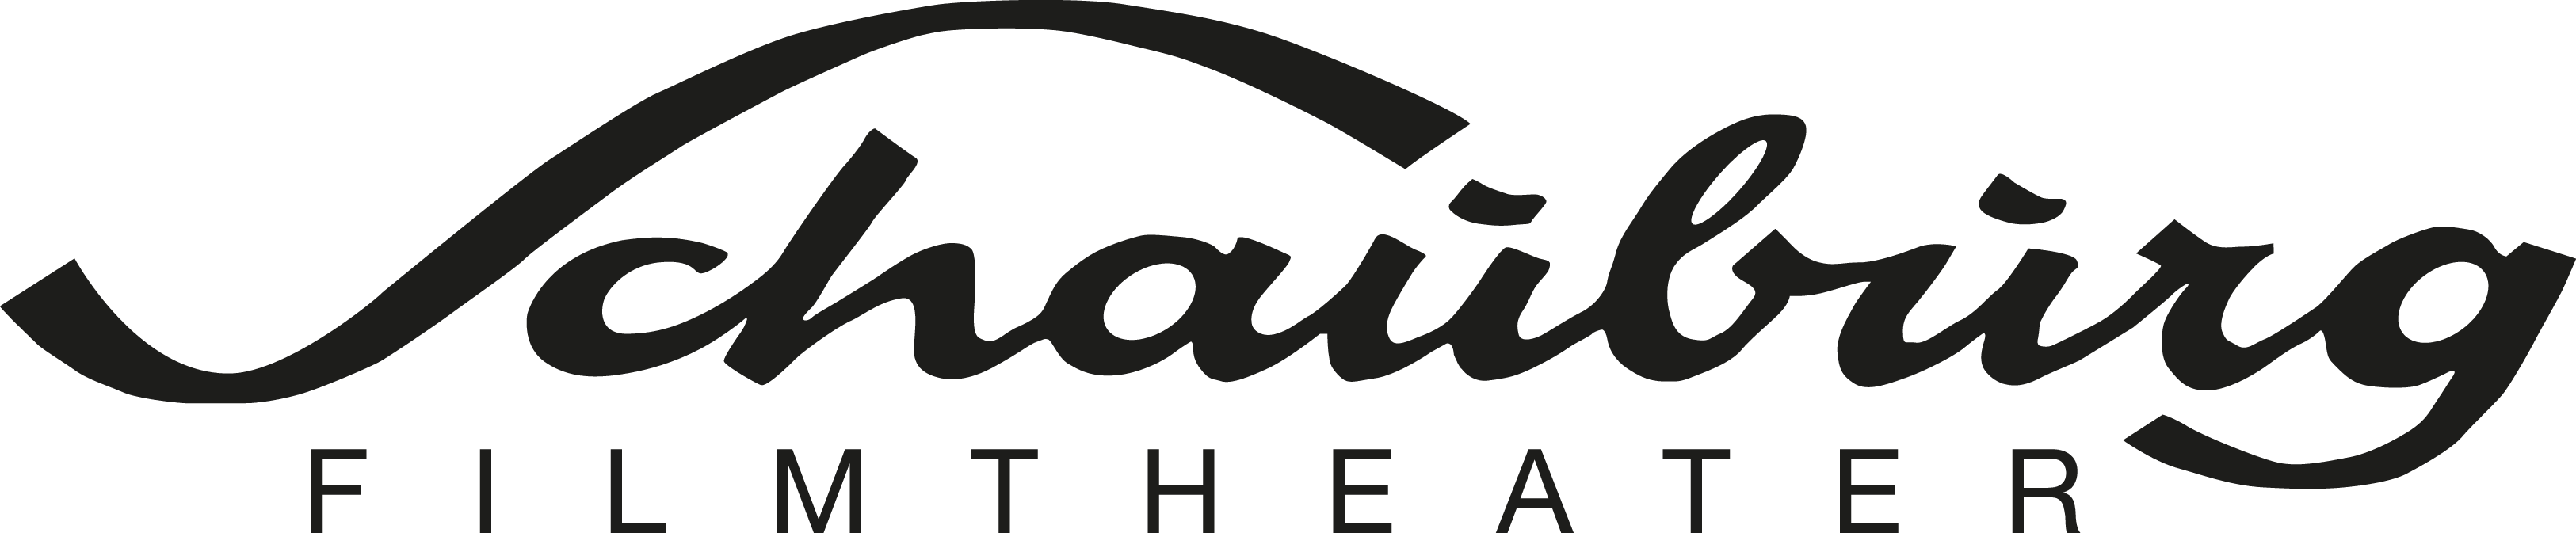 Schauburg Filmtheater Logo